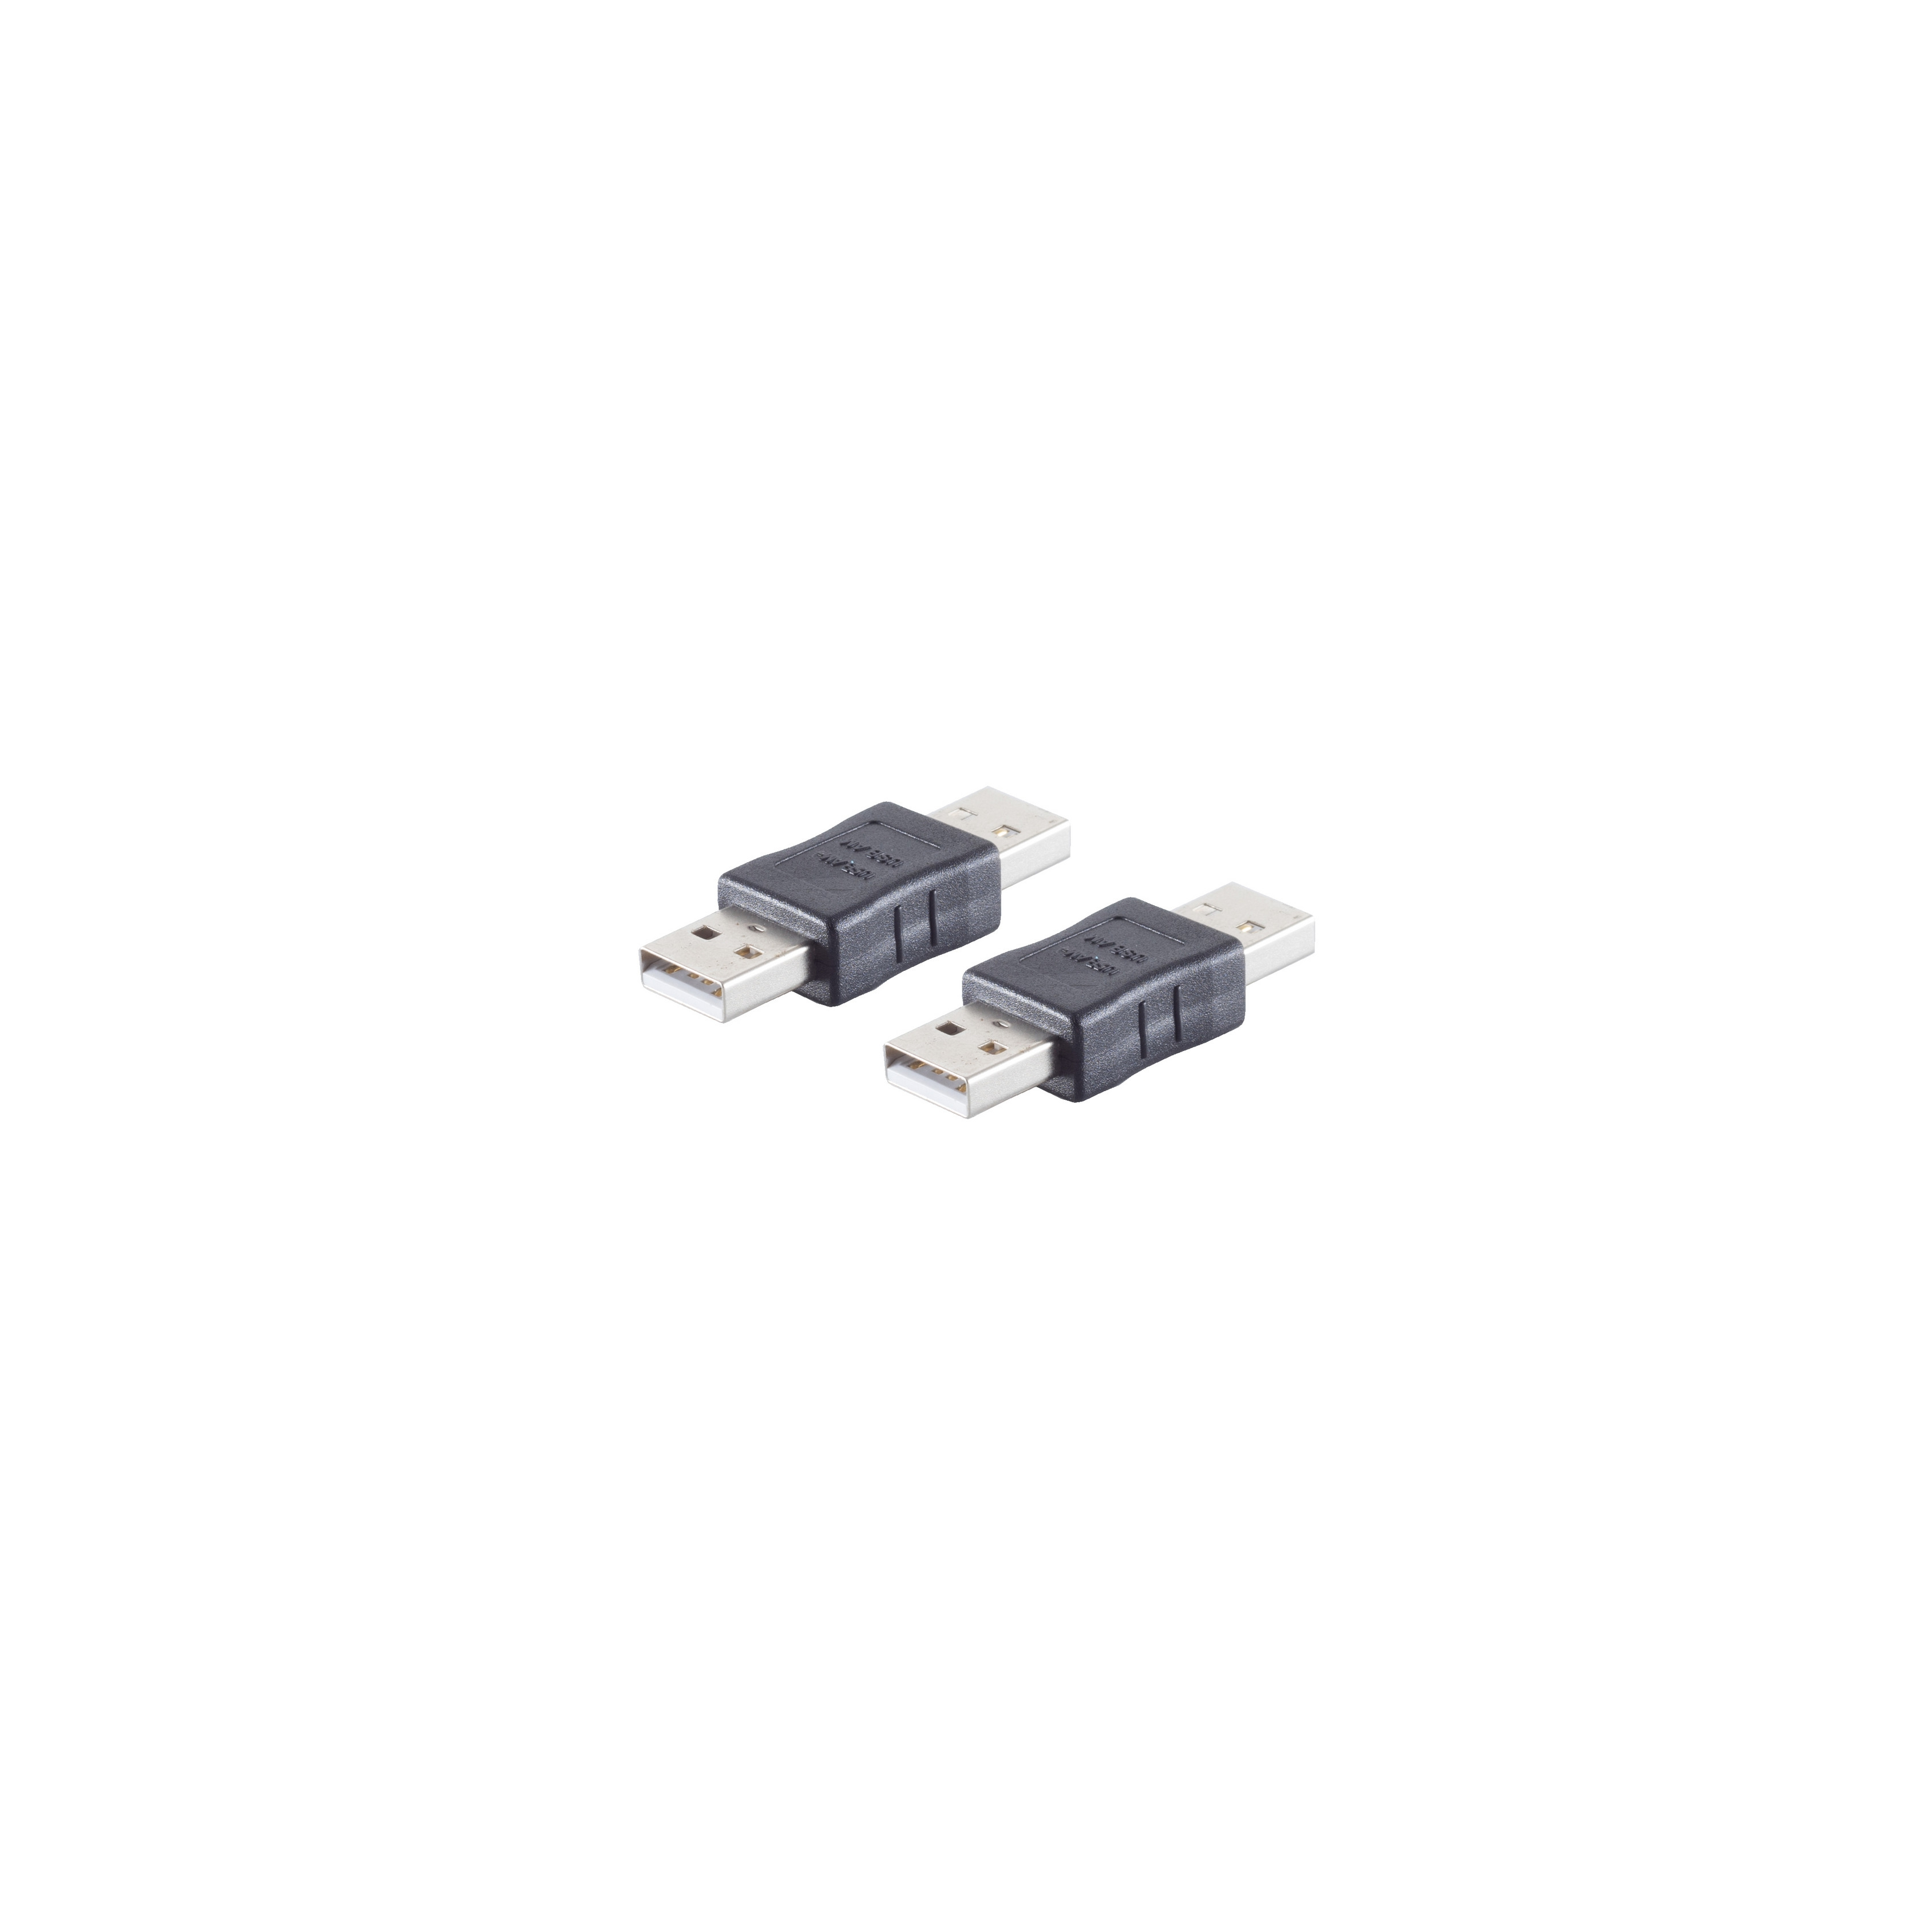 SHIVERPEAKS USB Adapter 2.0 USB Stecker A / A grau Stecker Adapter